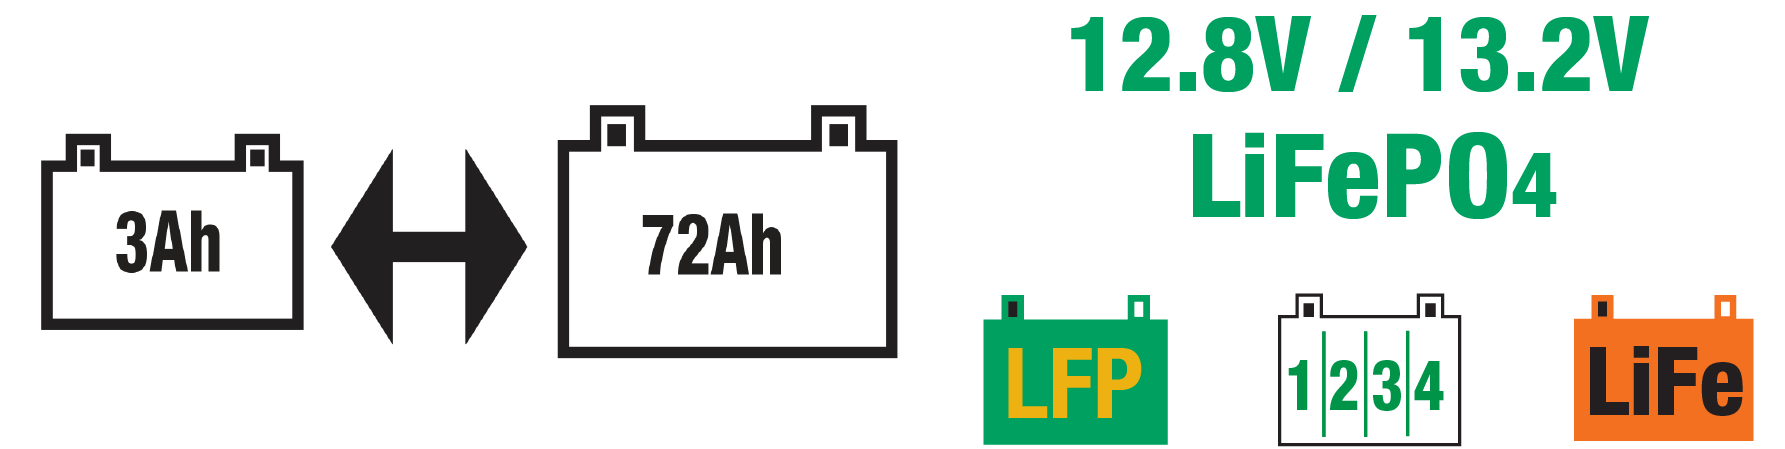 das optimate lithium 6a ist ideal für 12.8V/13.2V LiFeP04/LFP-Batterien